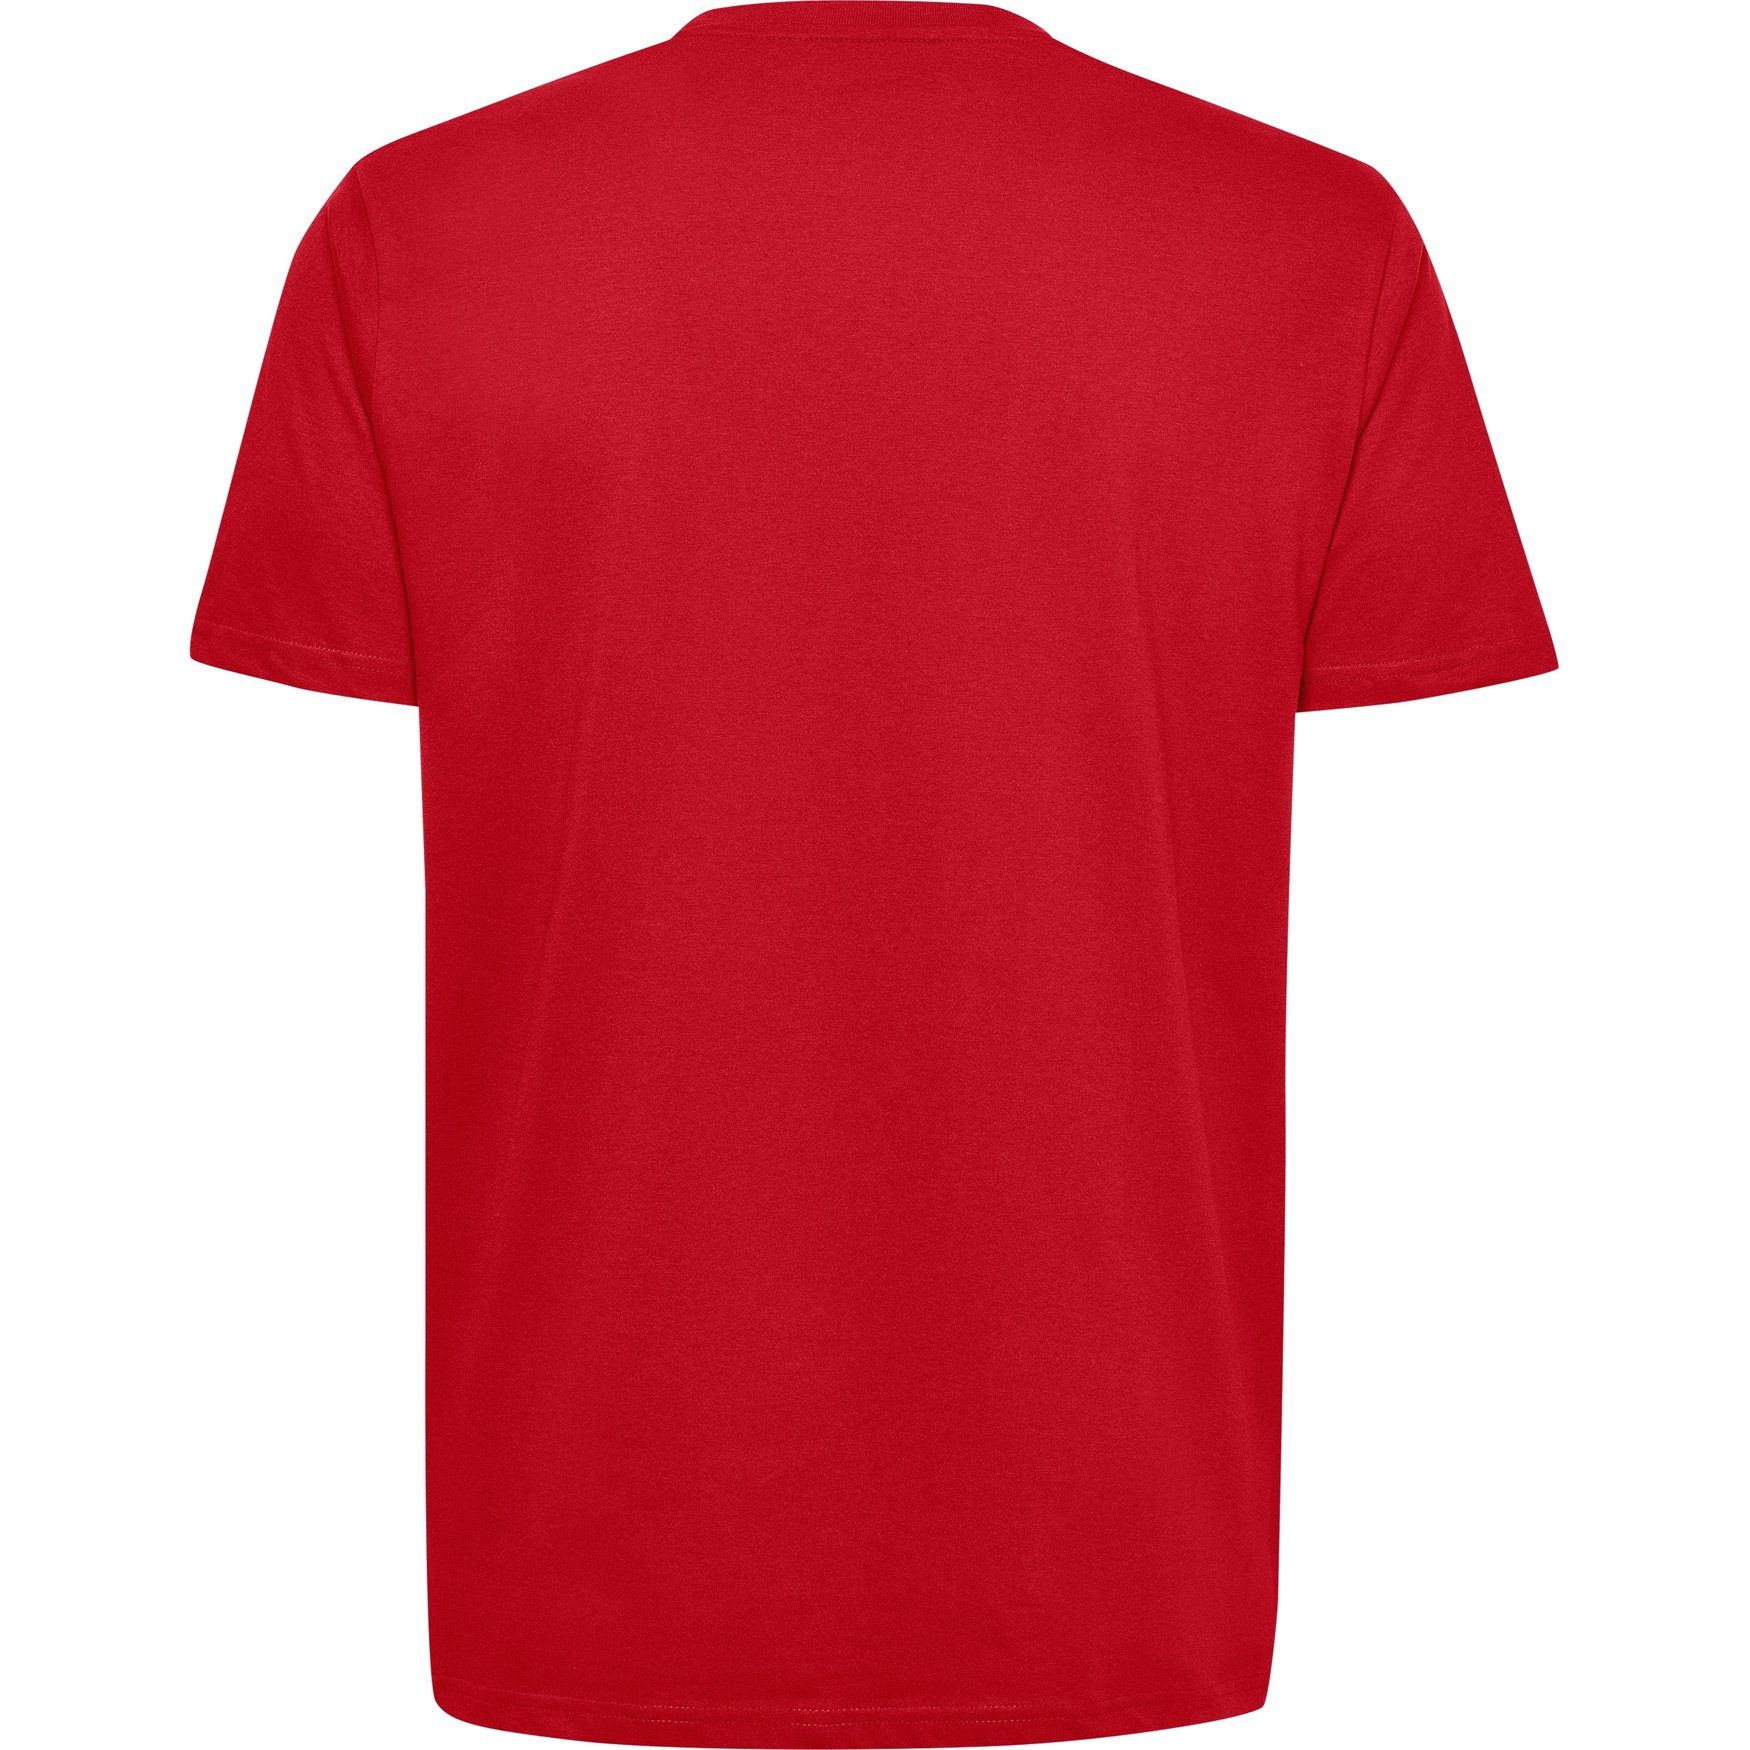 aus Logo hummel T-Shirt Kurzarm Rot 5125 Sport HMLGO Shirt Baumwolle T-Shirt Rundhals in